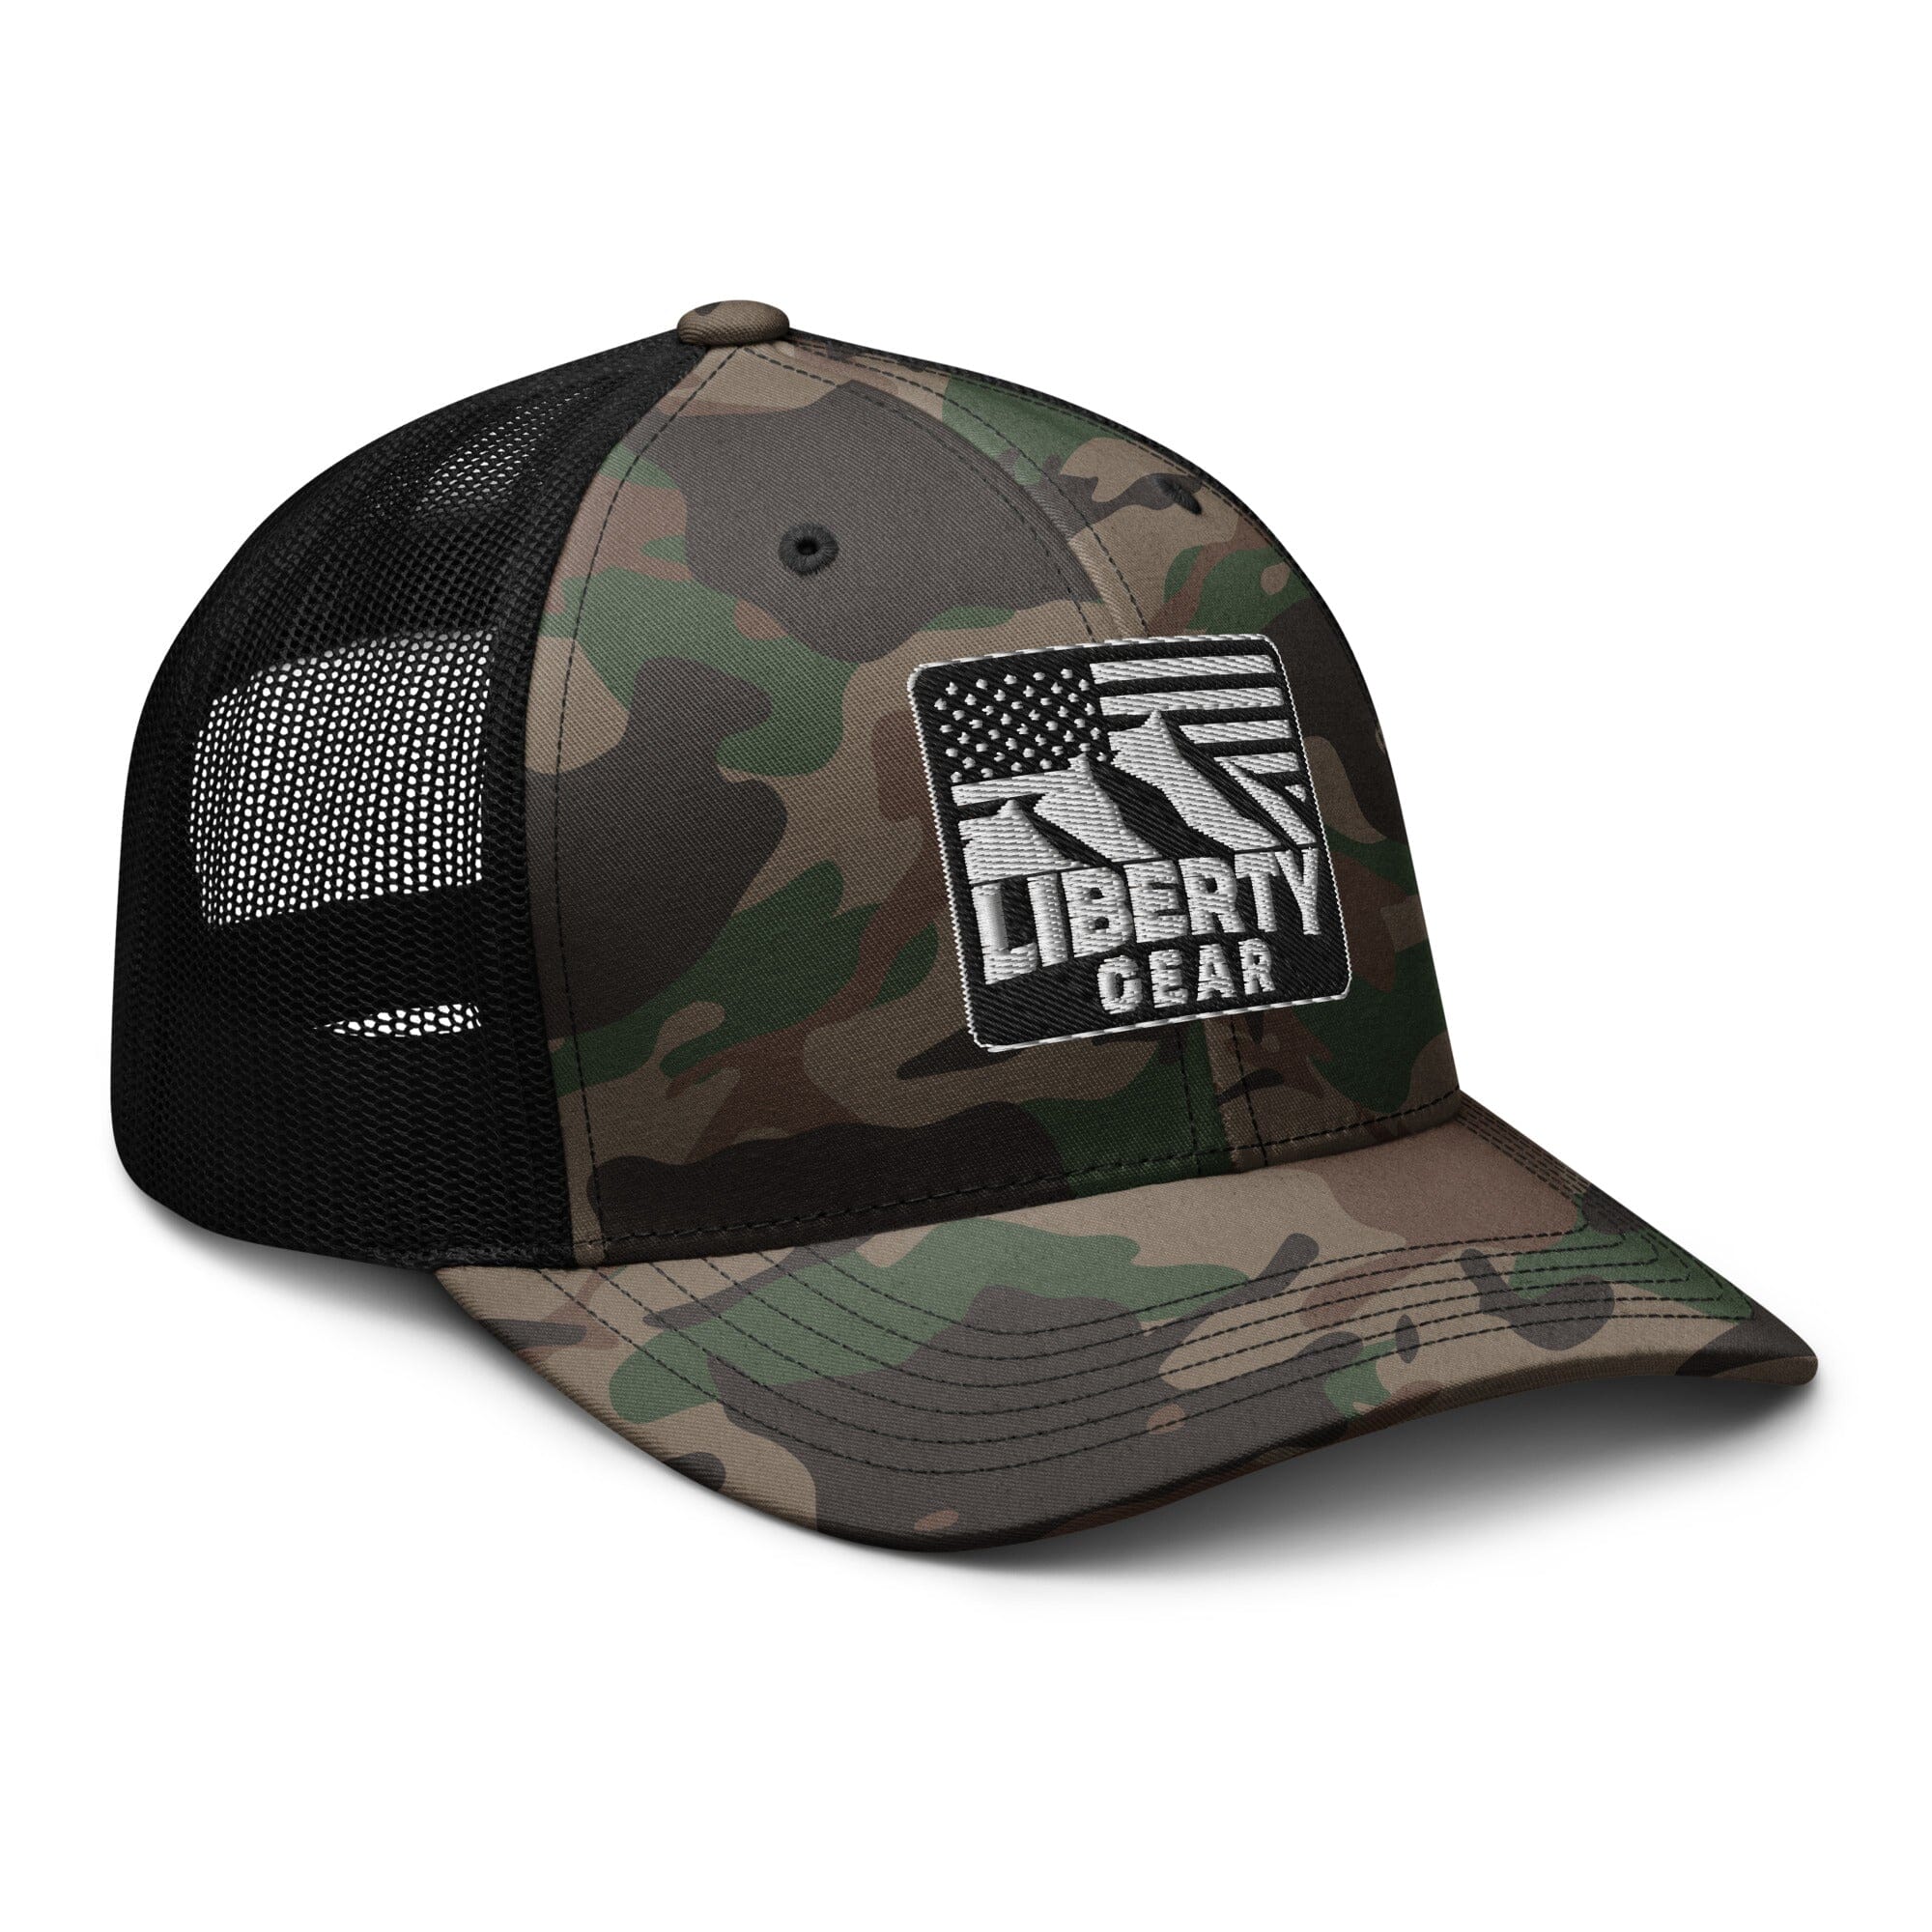 Liberty Gear Camo Hat